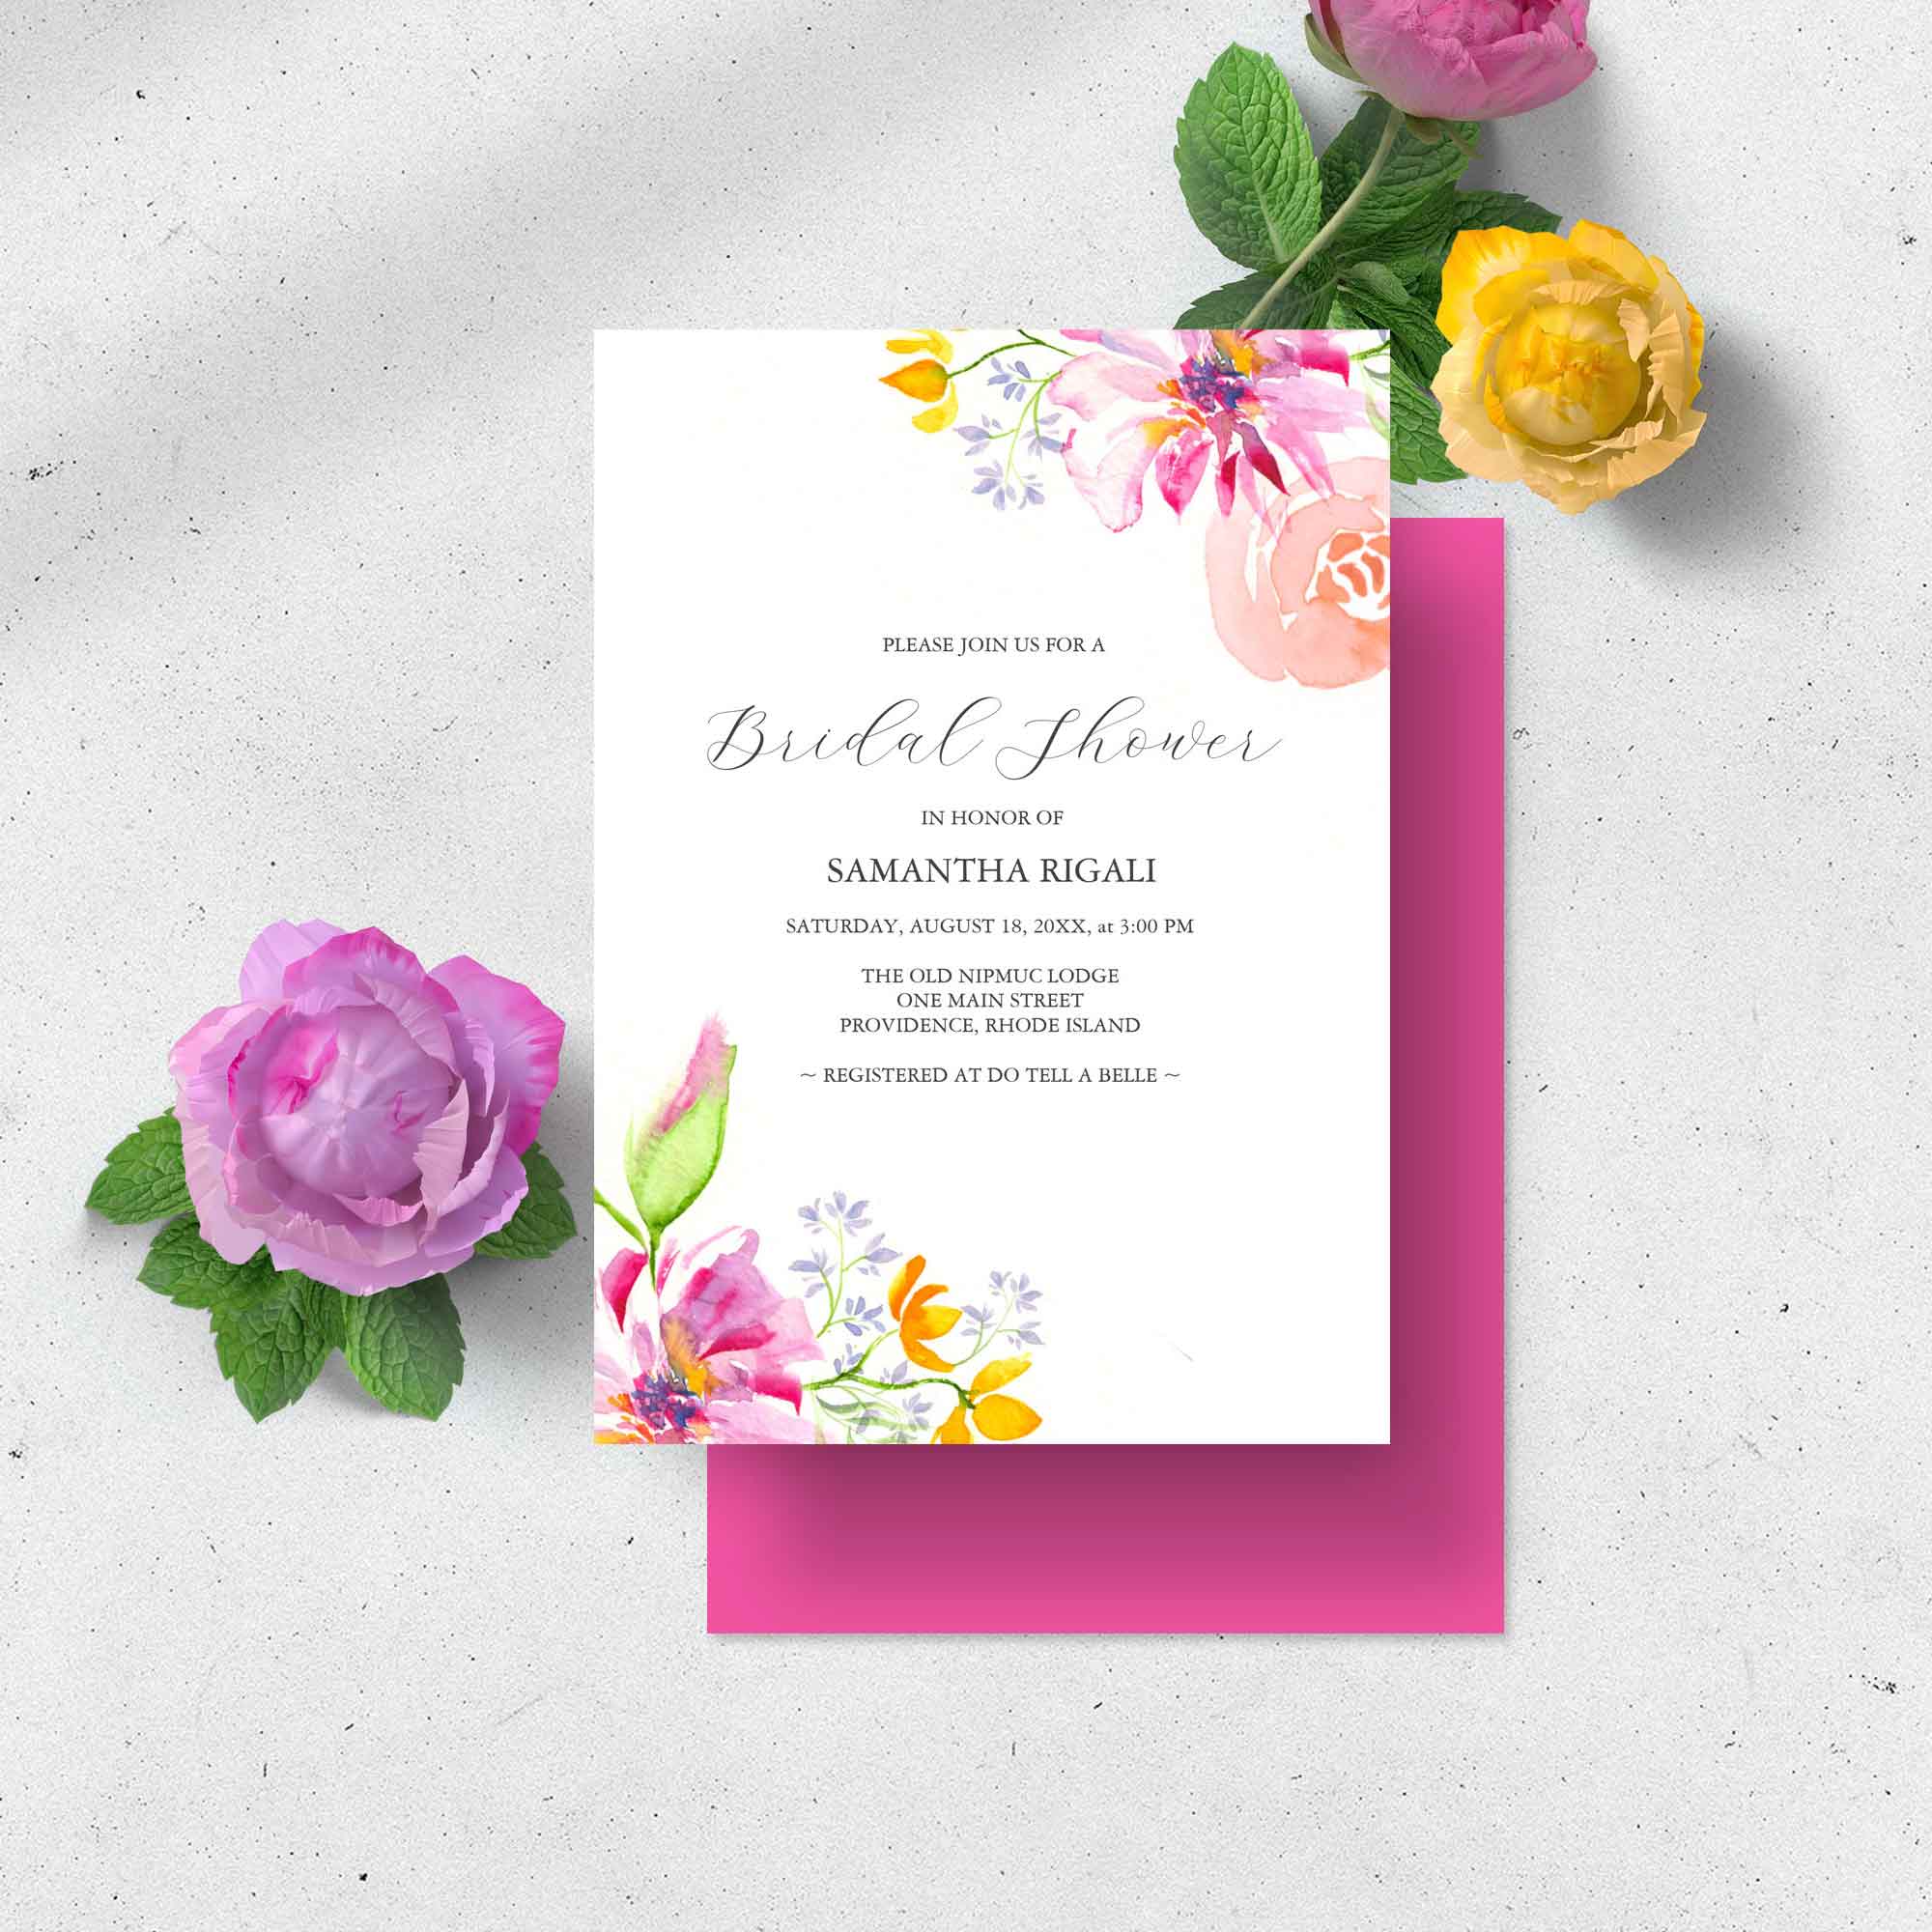 Unique floral bridal shower invitations feature unique watercolor multicolor flowers by Victoria Grigaliunas.